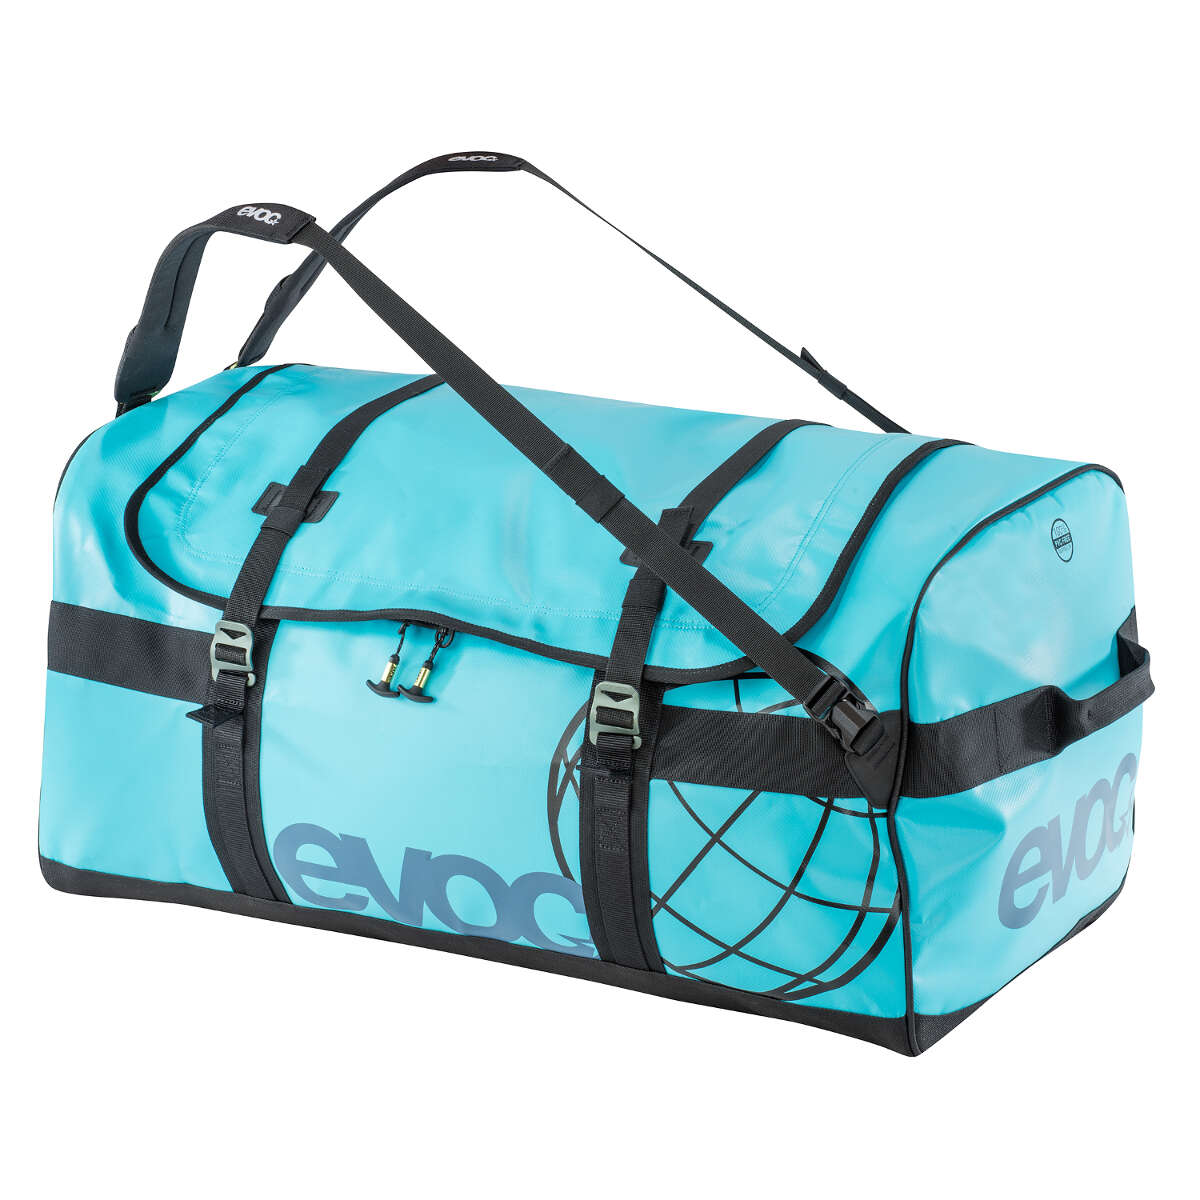 Evoc Sac de Voyage Duffle Bag Neon Bleu, 40 Litre